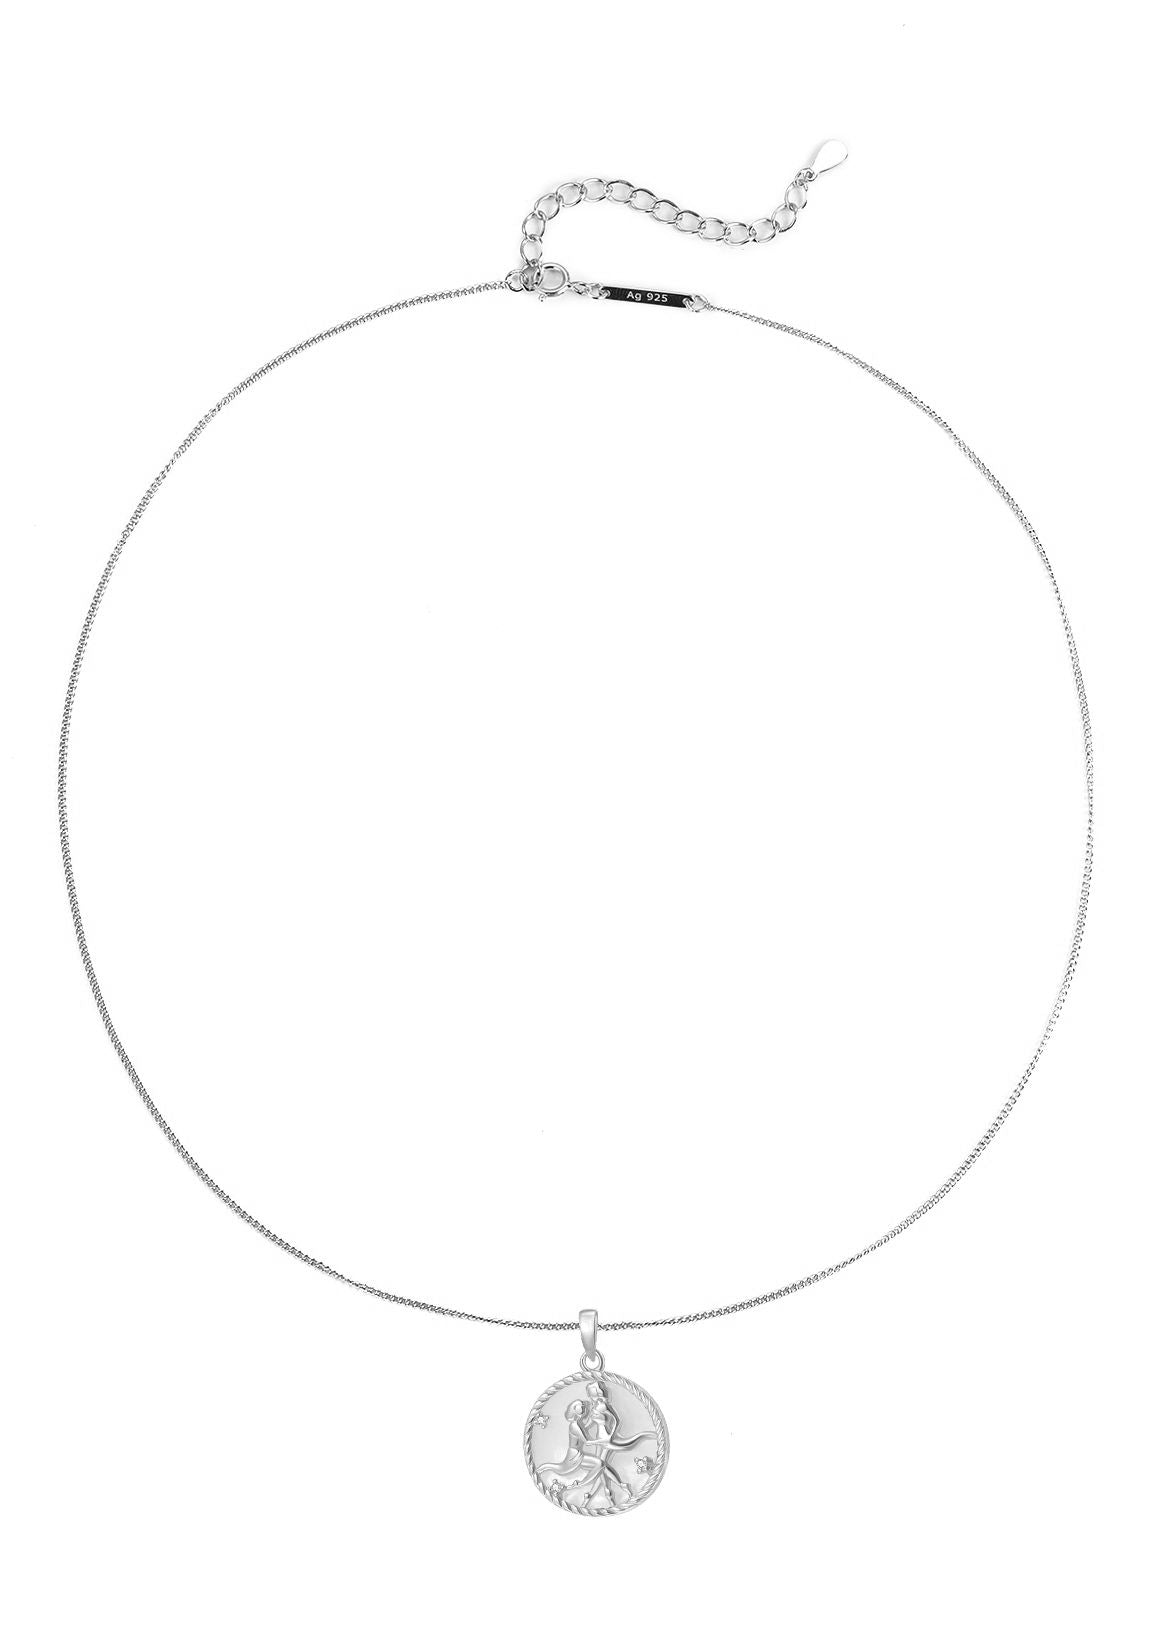 Gemini Zodiac Pendant Necklace